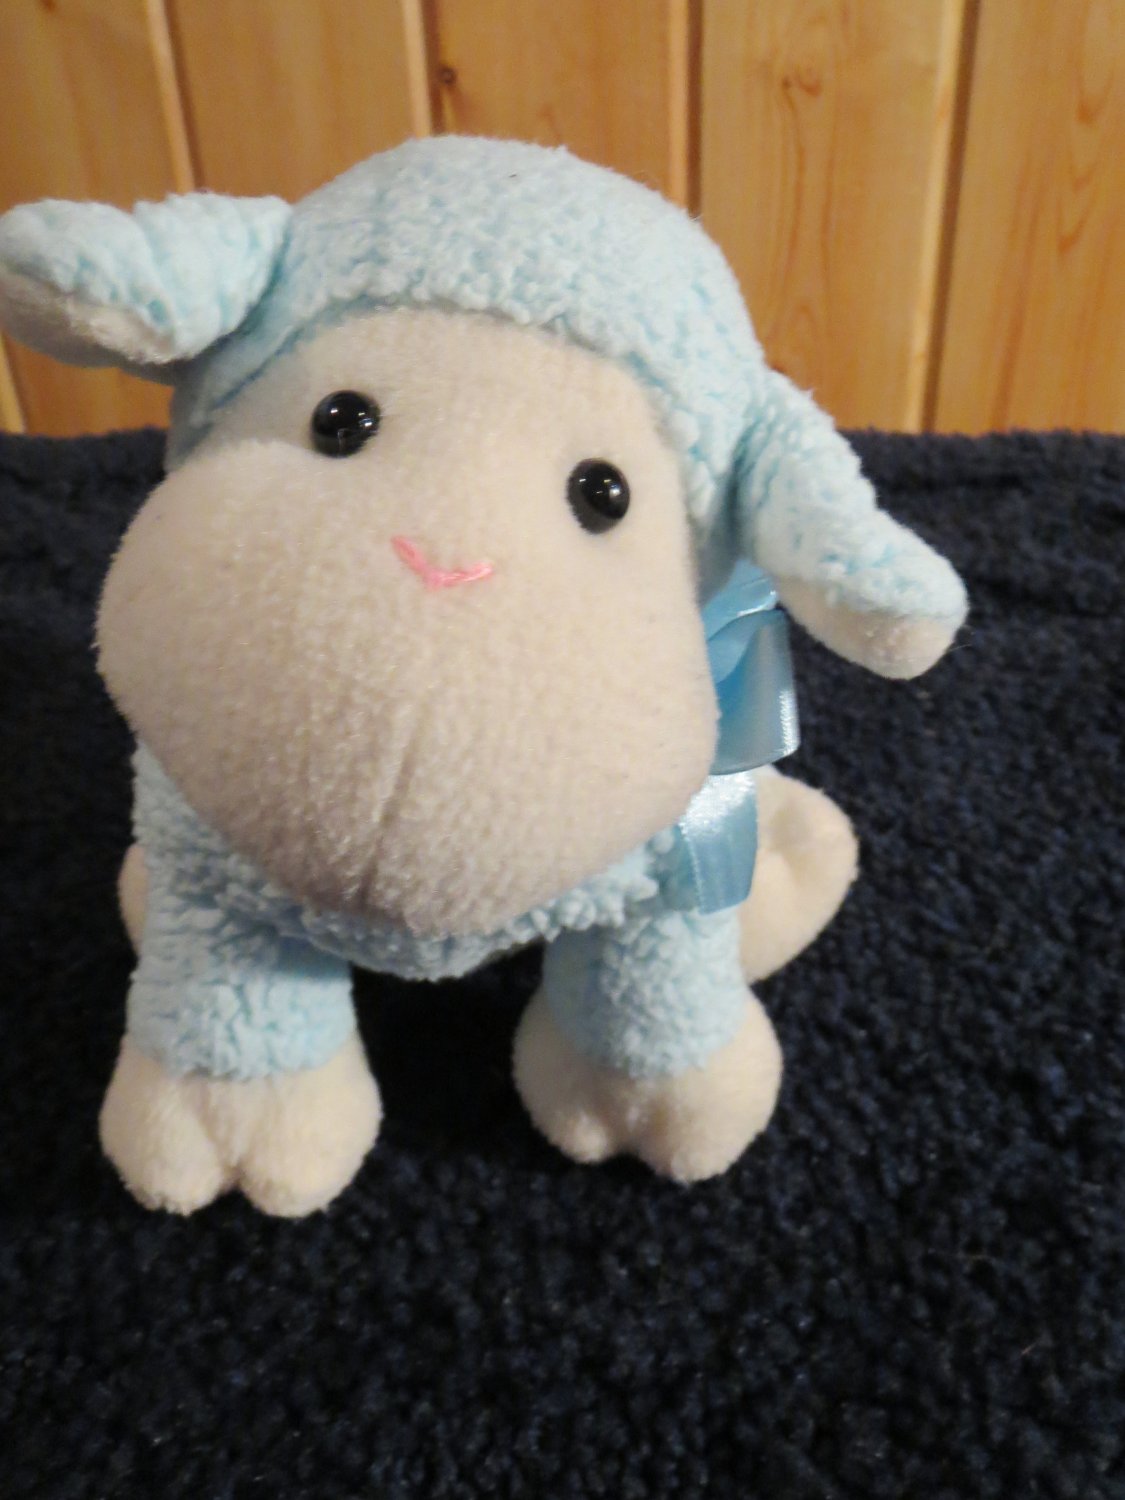 blue lamb stuffed animal